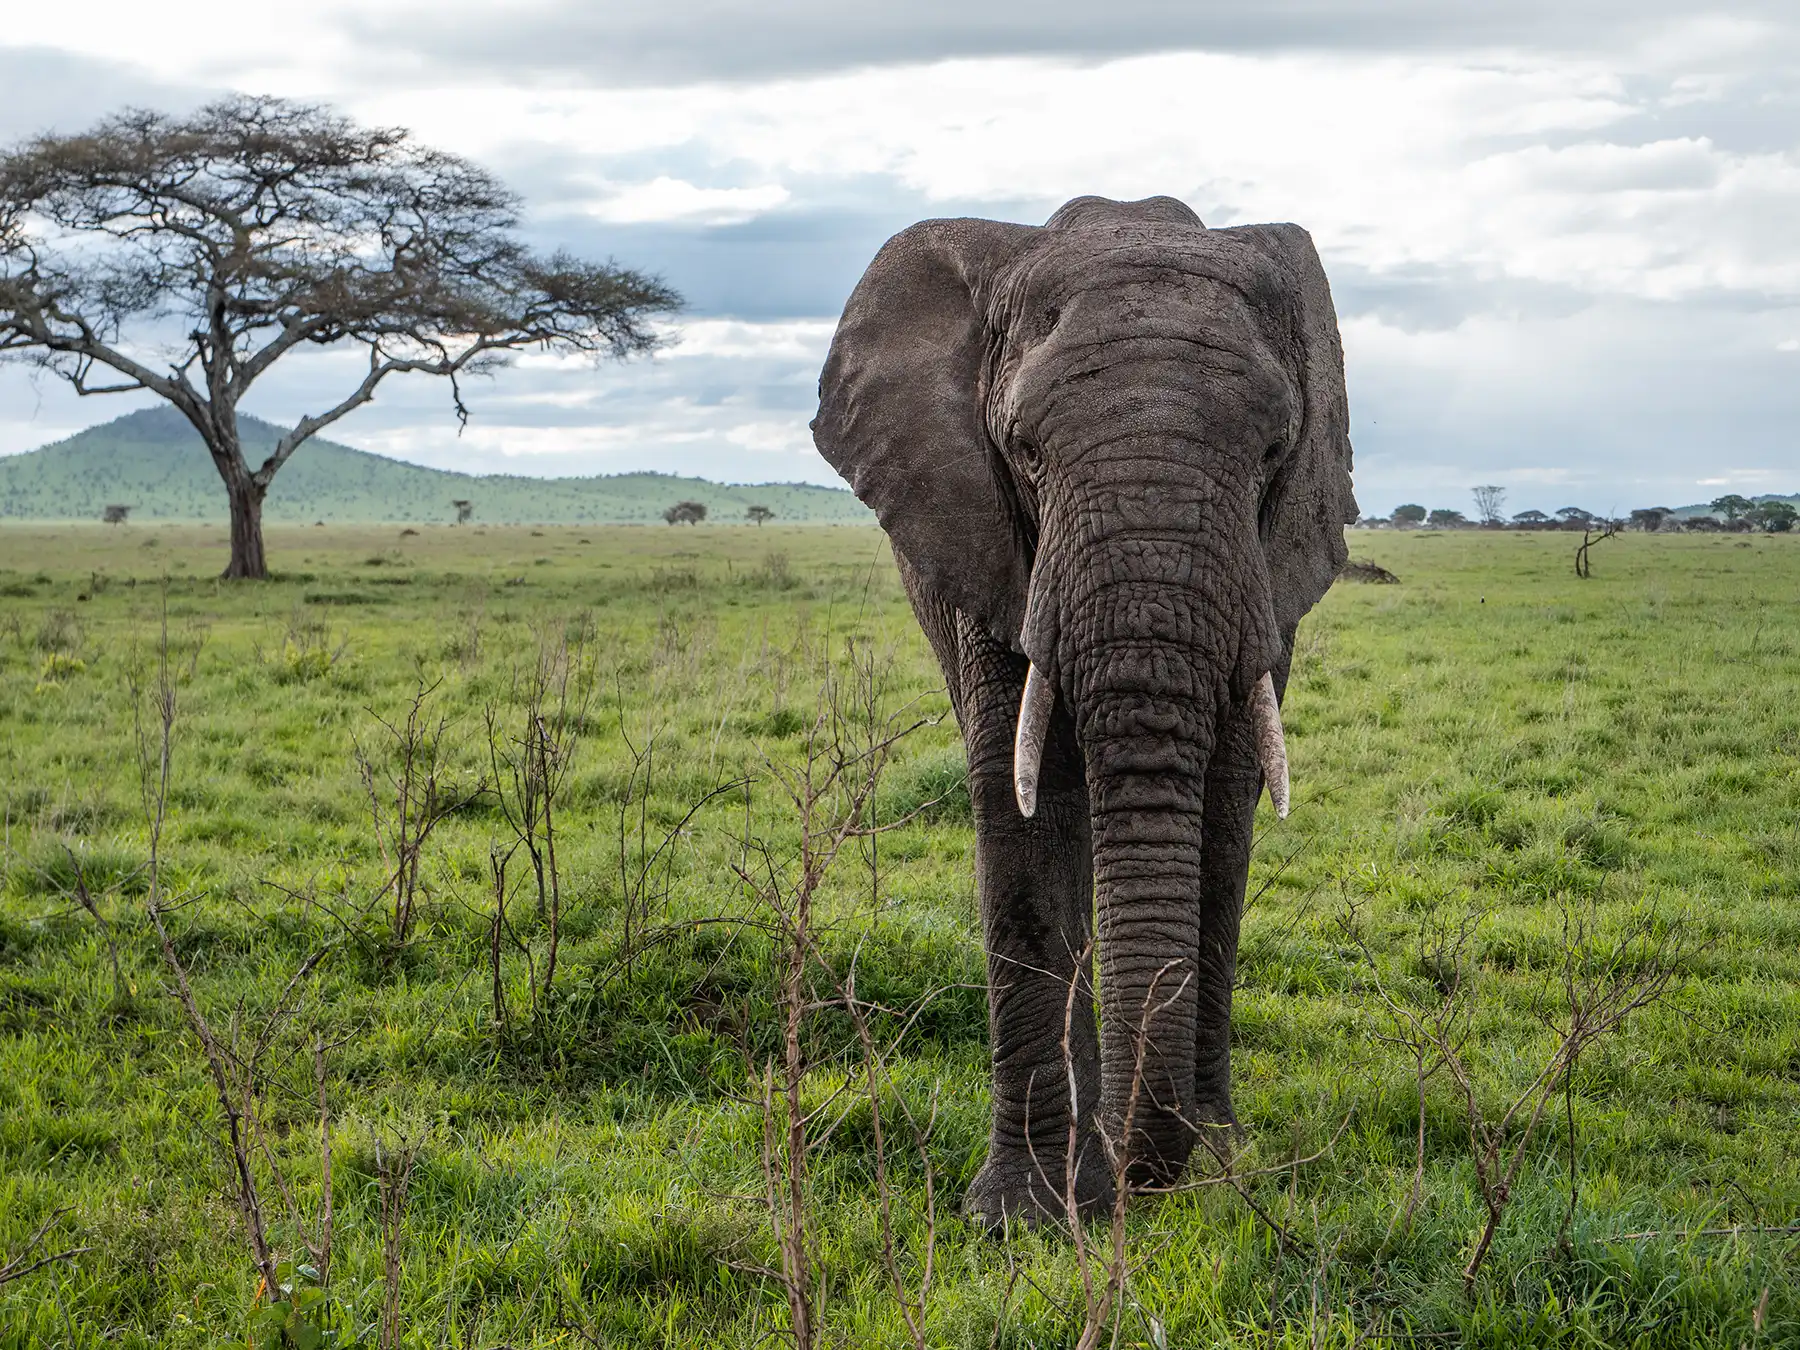 Elephant by a tree in during a Serengeti safari in Tanzania